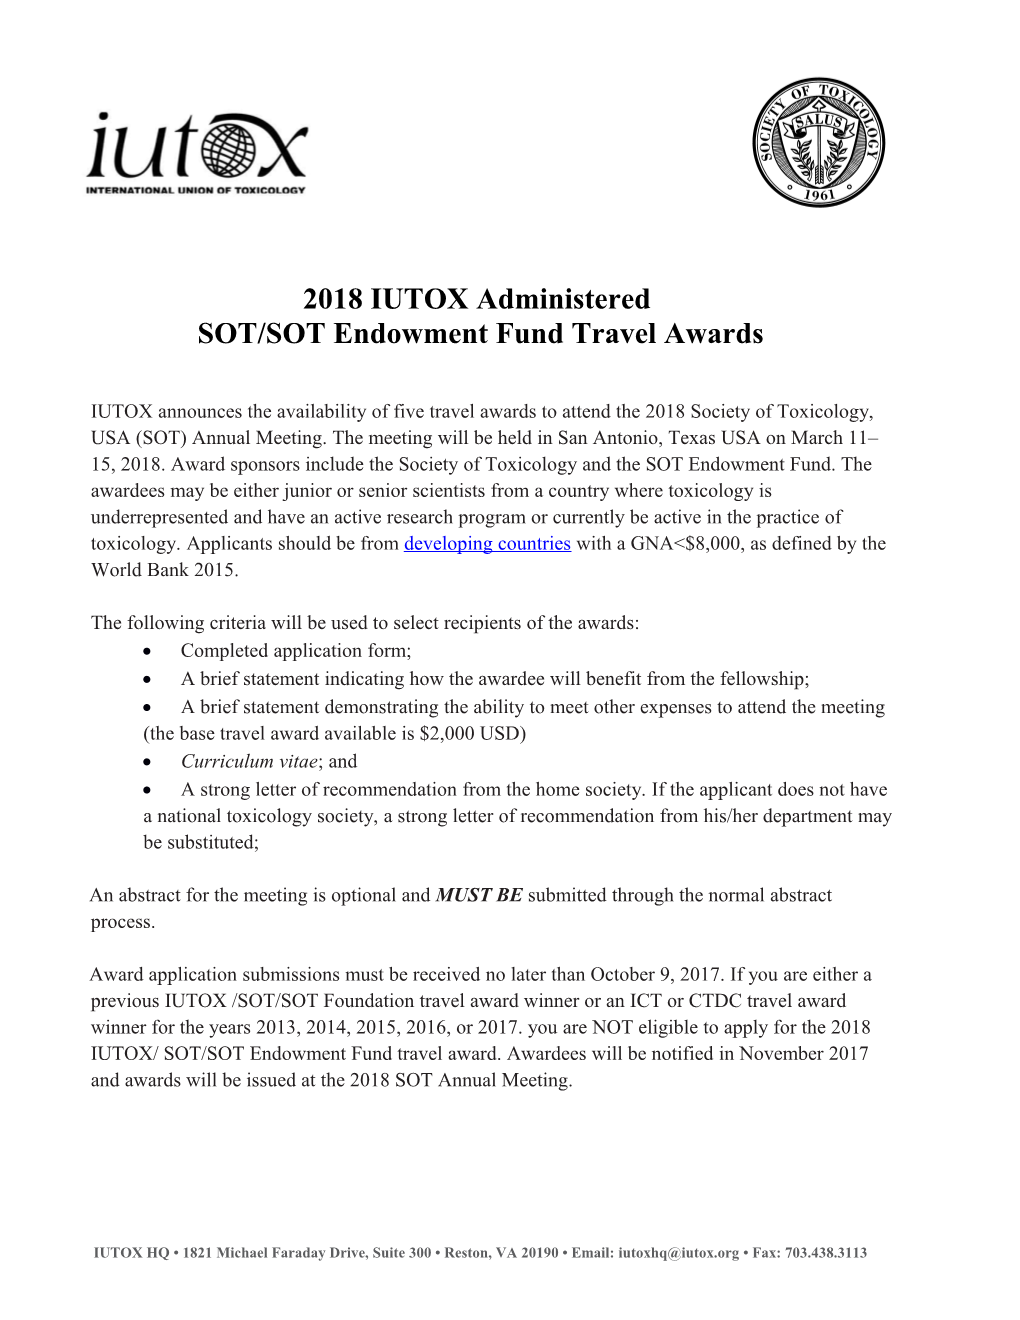 SOT/SOT Endowment Fund Travel Awards